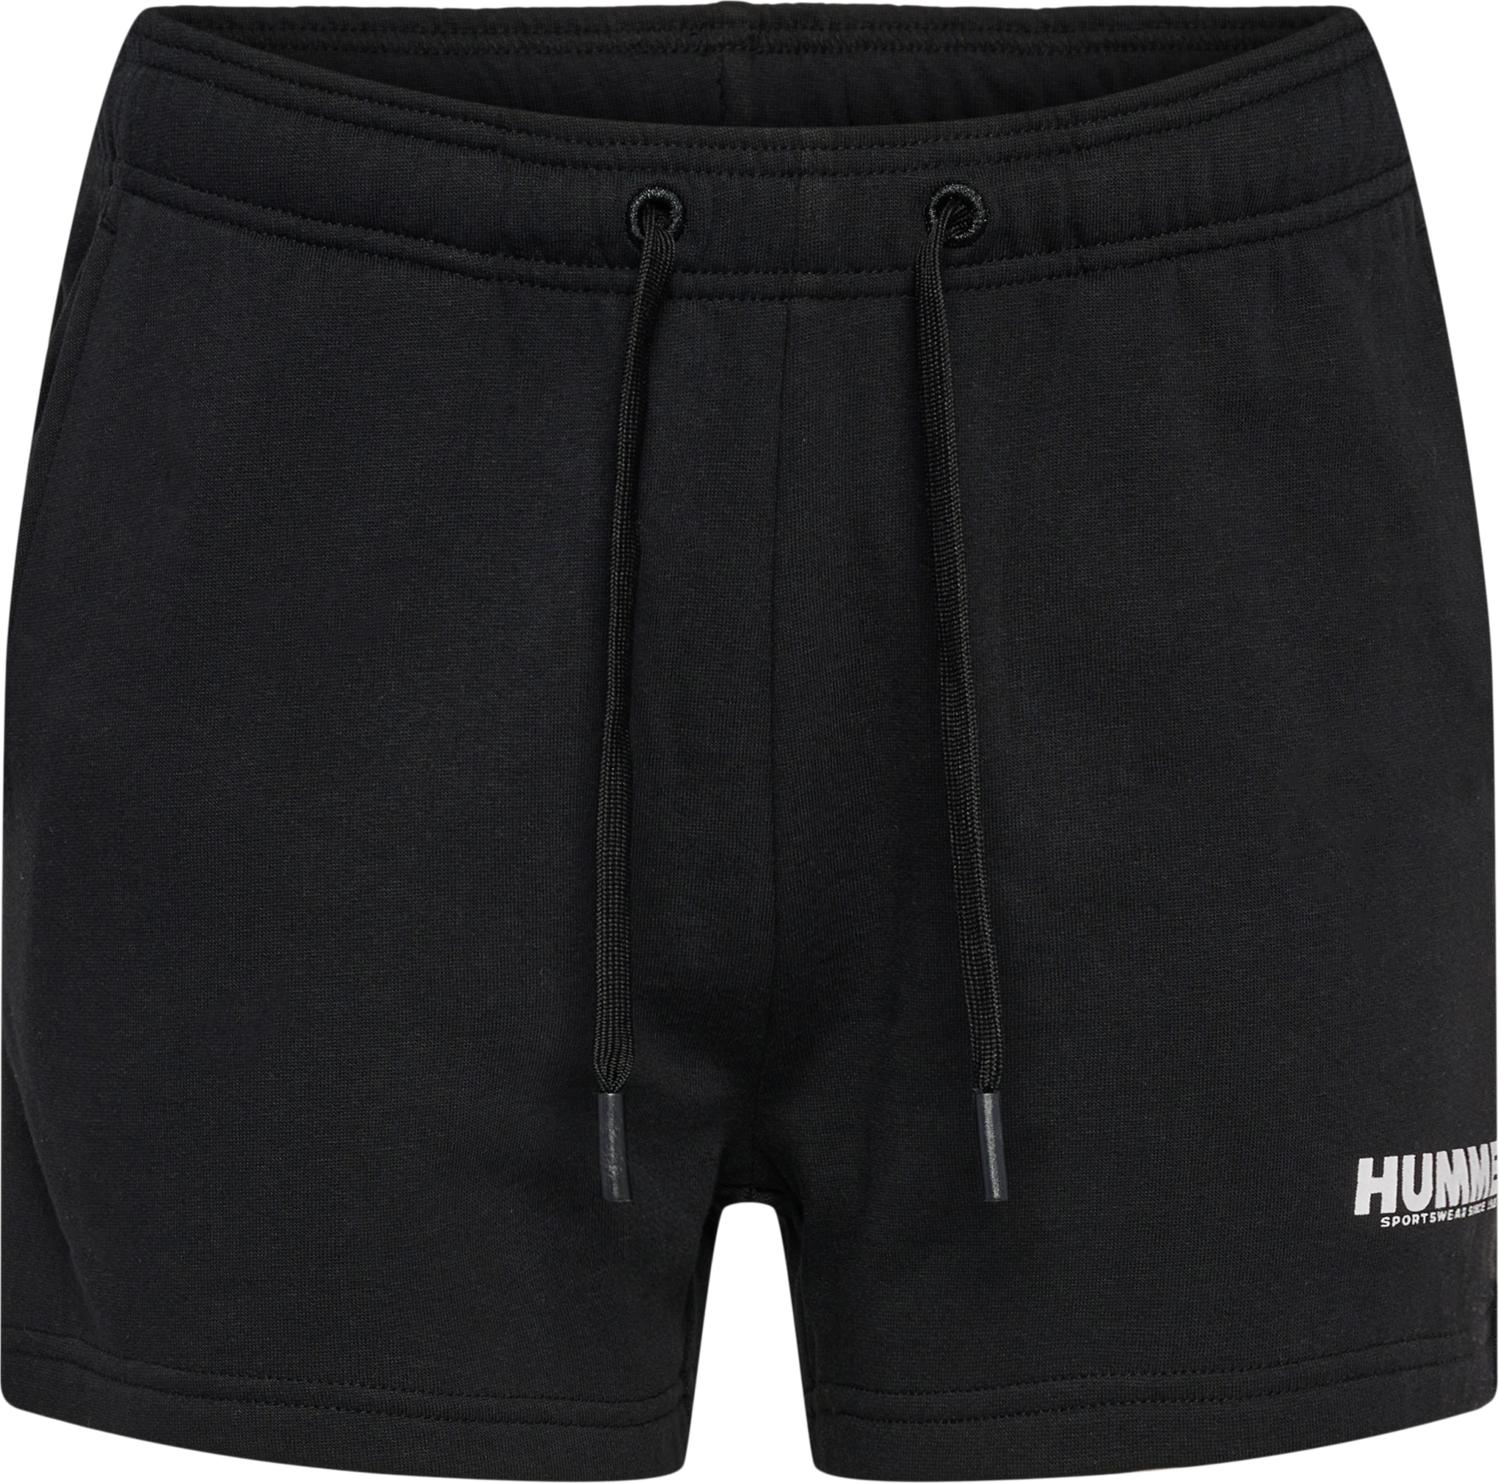 Hummel Women’s hmlLEGACY Shorts Black